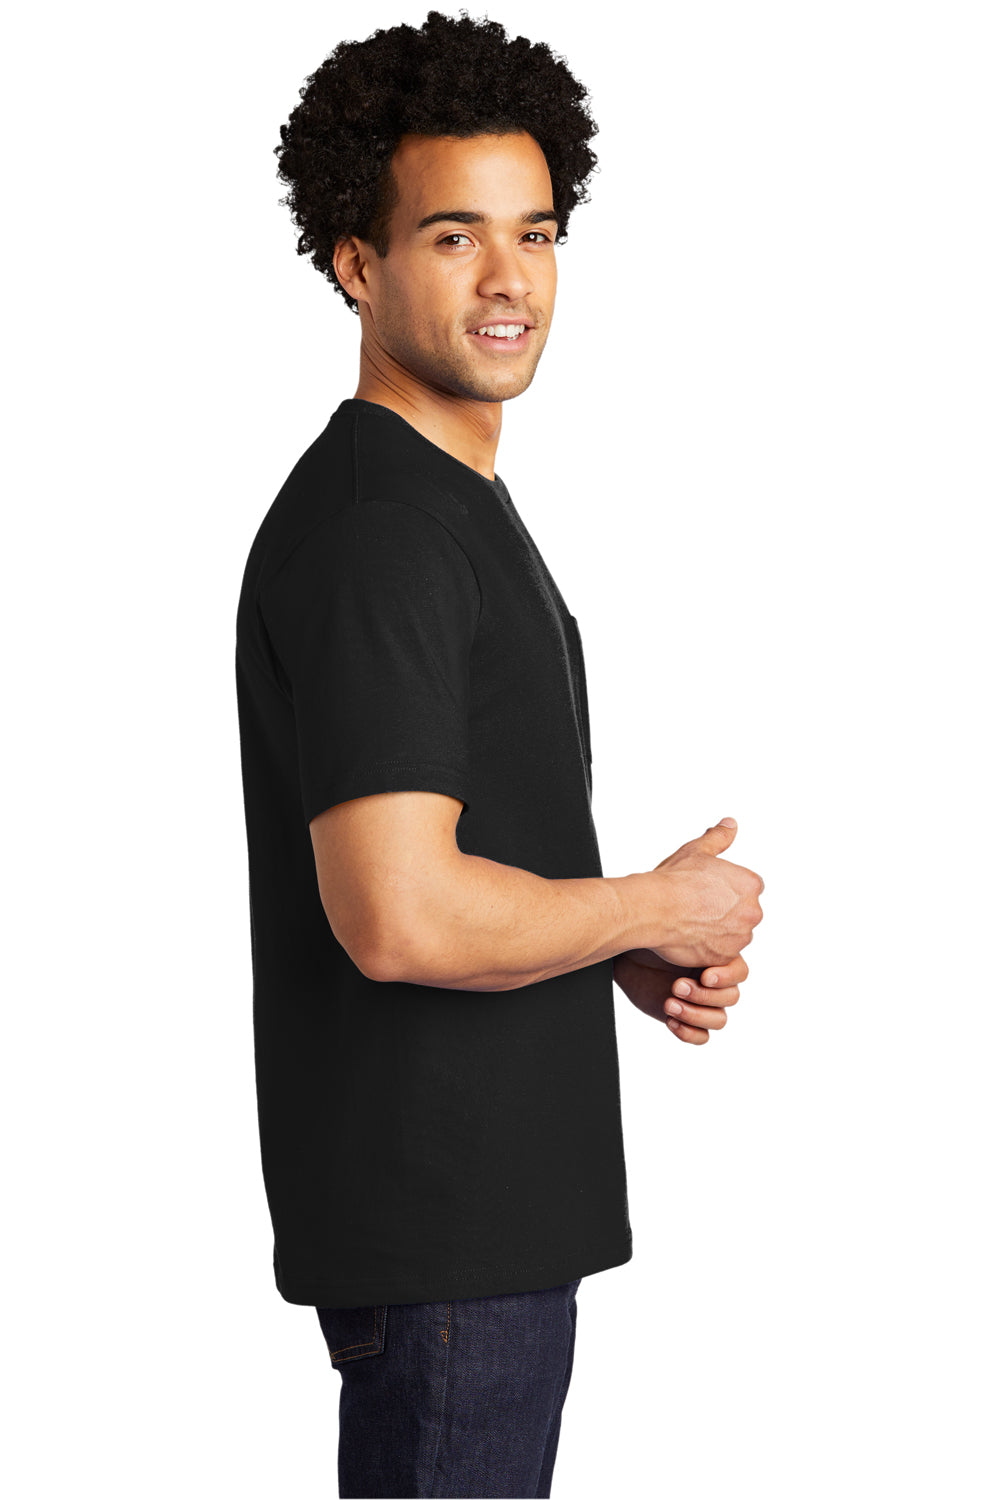 Port & Company Mens Bouncer Short Sleeve Crewneck T-Shirt w/ Pocket Deep Black Side